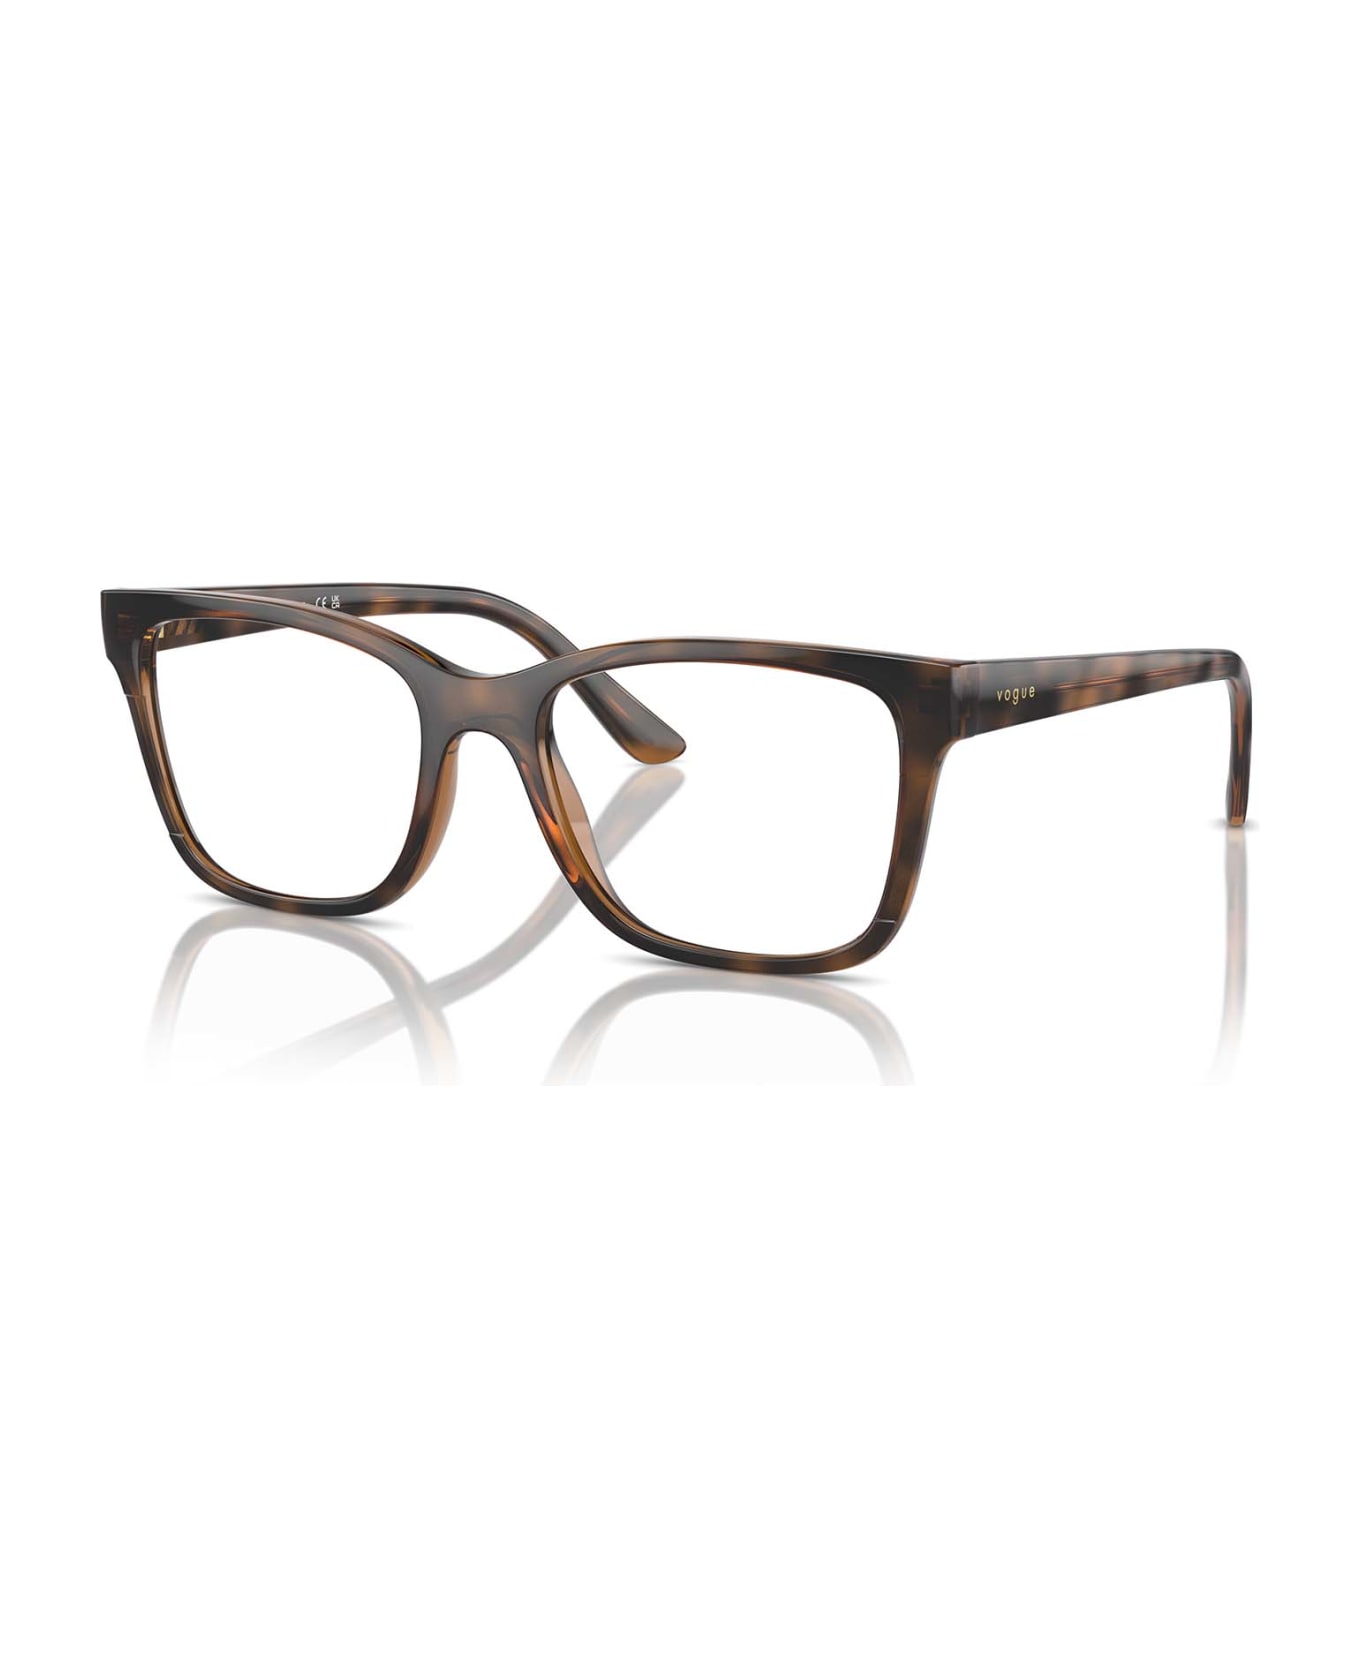 Vogue Eyewear Vo5556 Top Dark Havana / Light Brown Glasses - Top Dark Havana / Light Brown